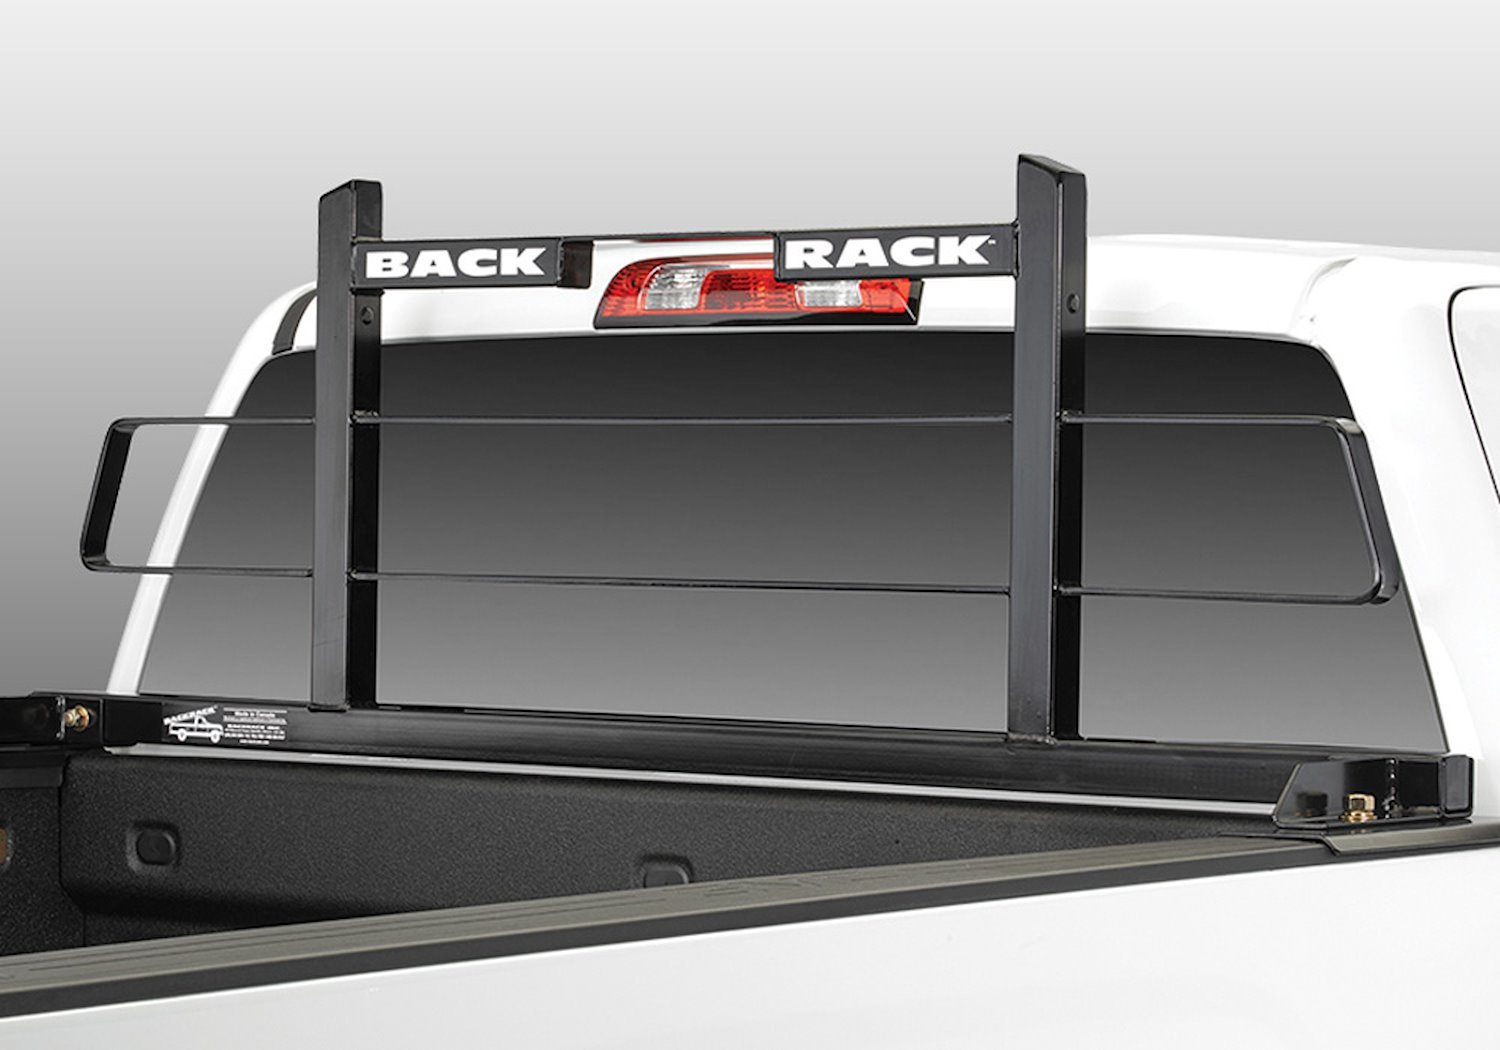 Original Rack, Fits Selec GM/Ford/Nissan/Ram/Toyota Pickup Trucks